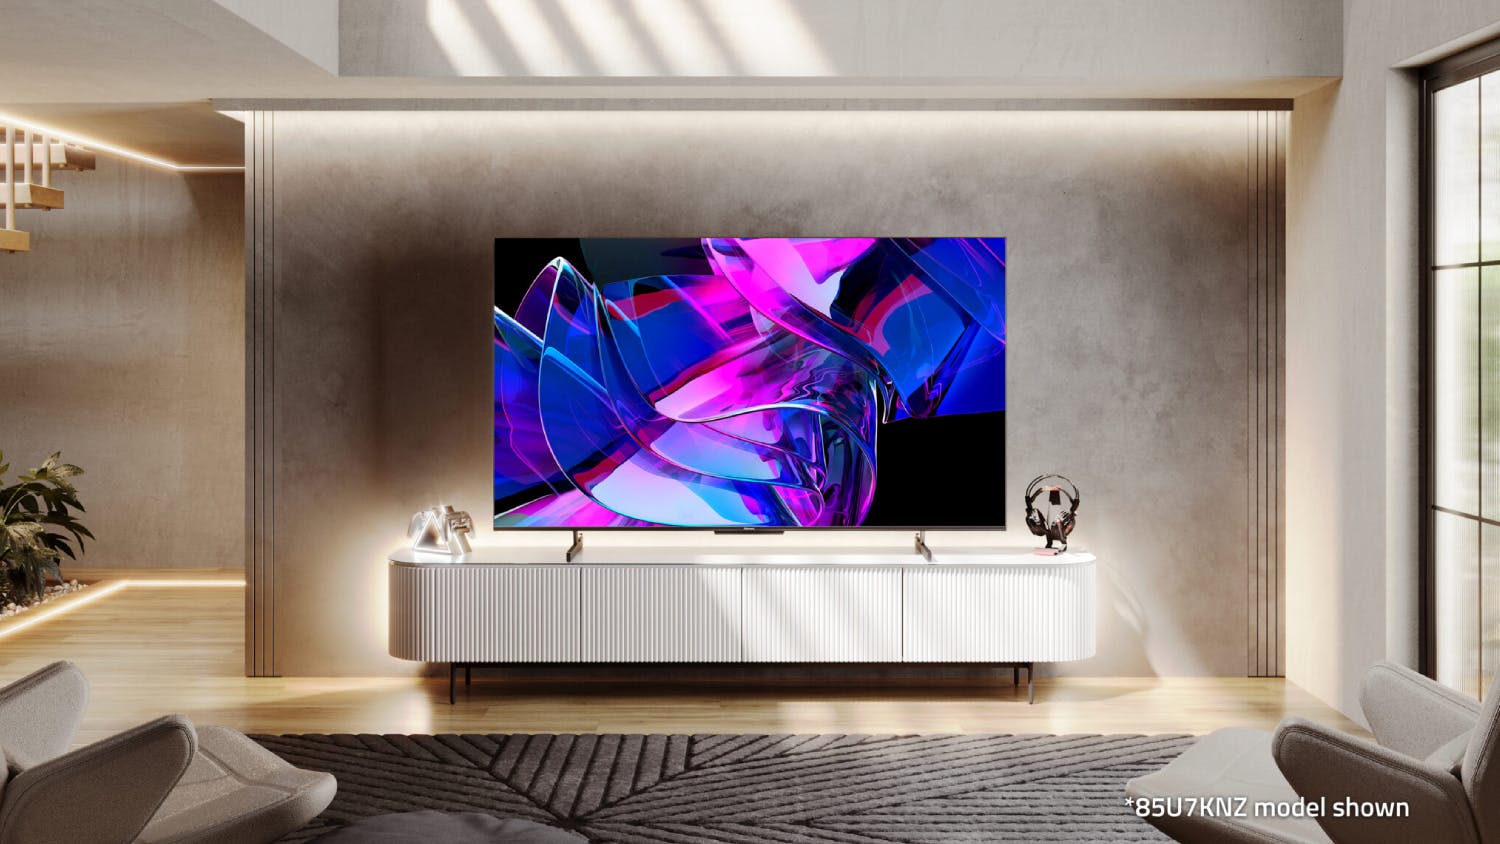 Hisense 65U7K 65'' Mini-LED 4K UHD ULED (3840x2160) Smart TV vs. Sony  Bravia XR-42A90K 42 4K Ultra HD (3840x2160) OLED Google TV